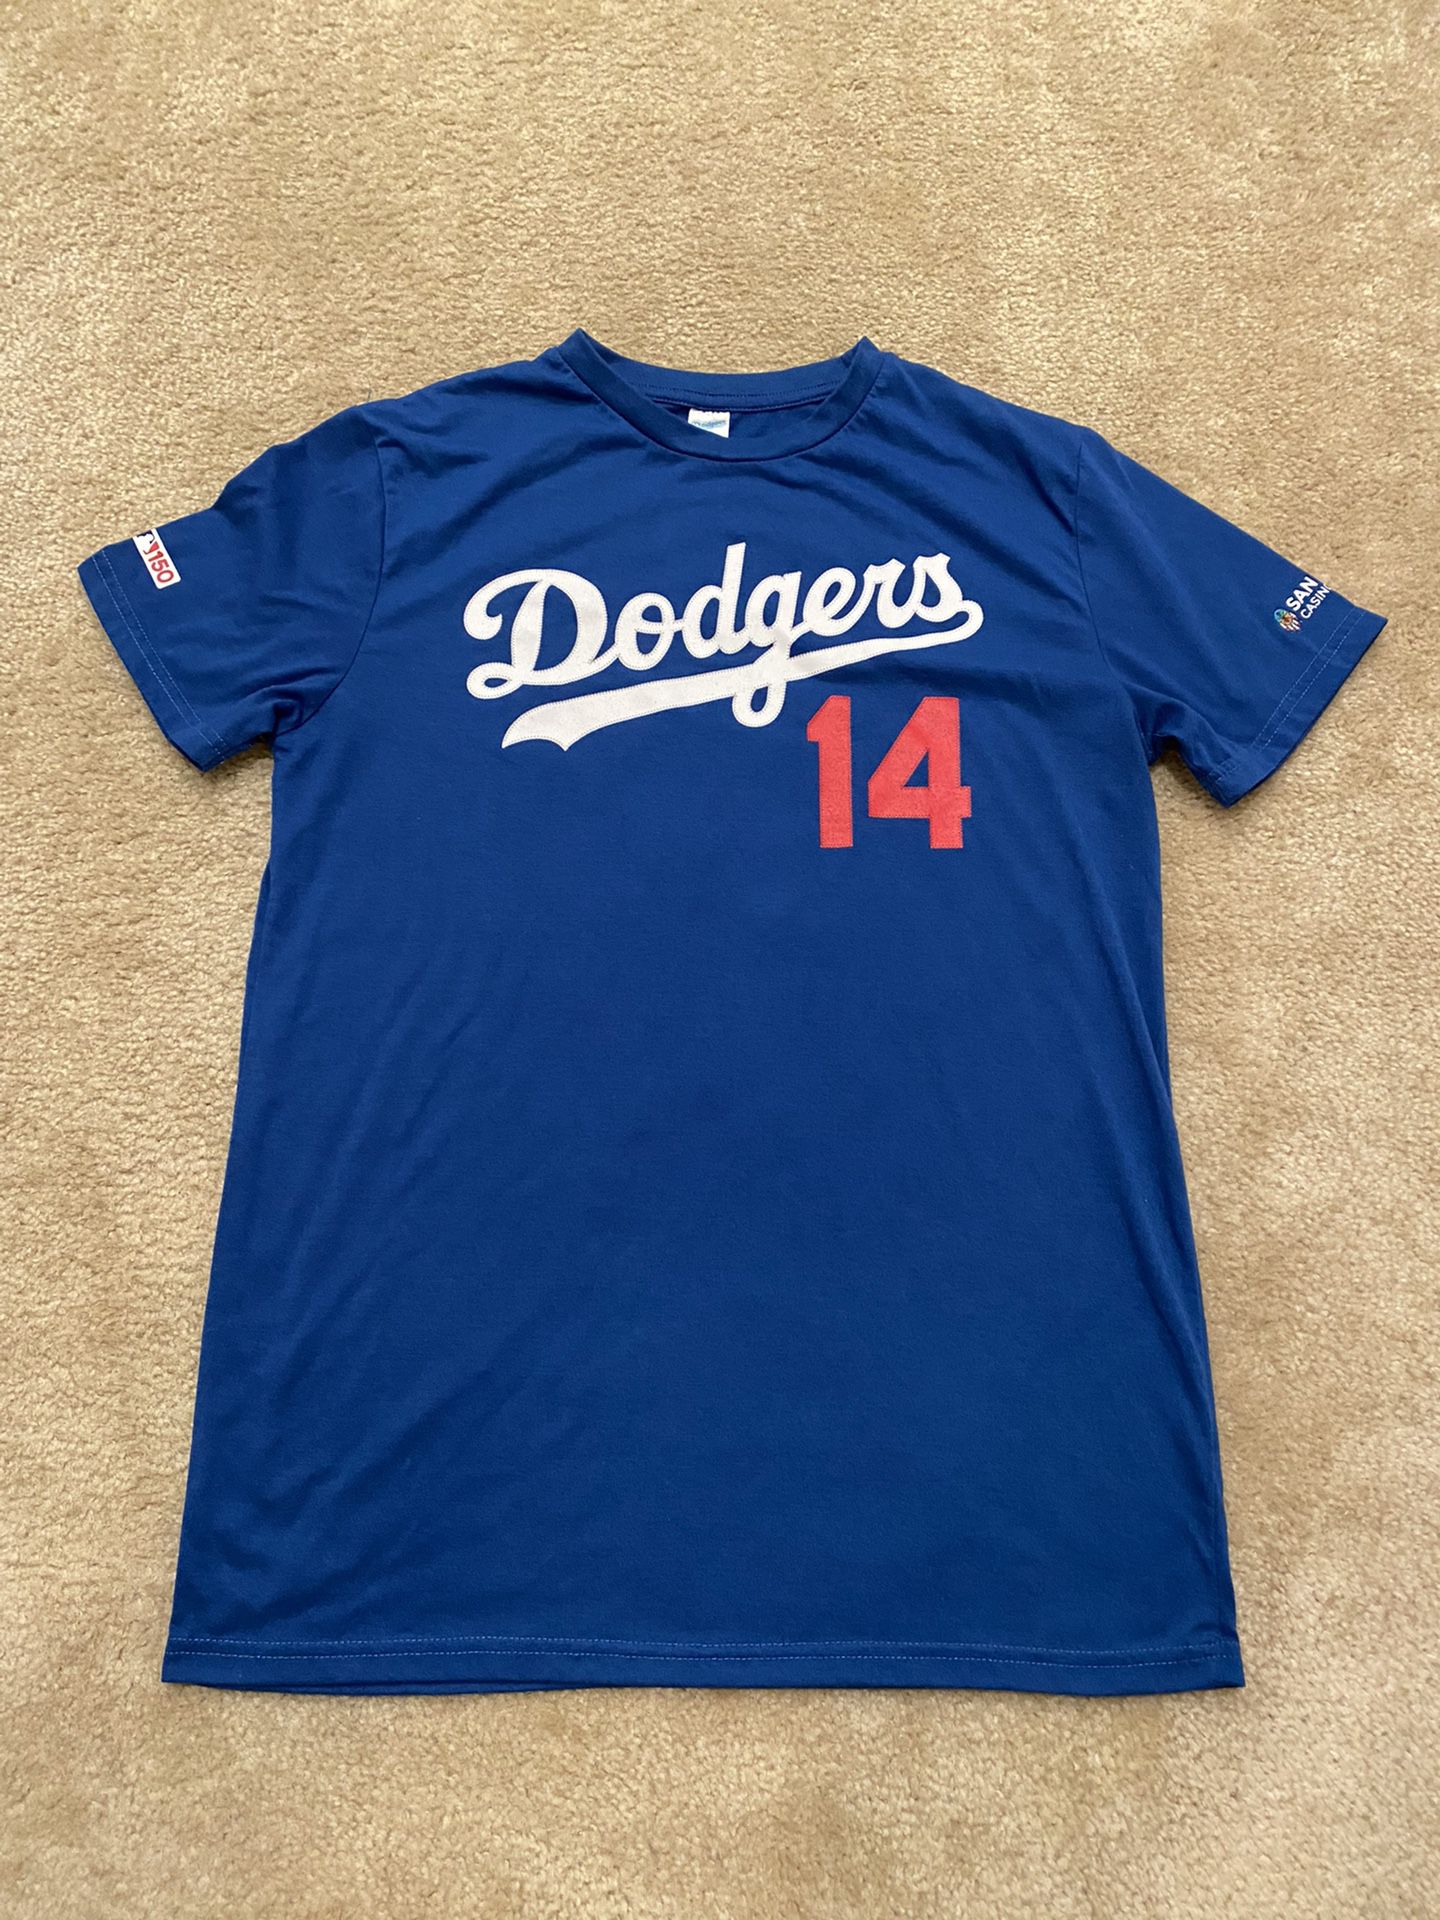 Los Angeles Dodgers Kike Hernandez MLB Baseball Shirt Size Medium